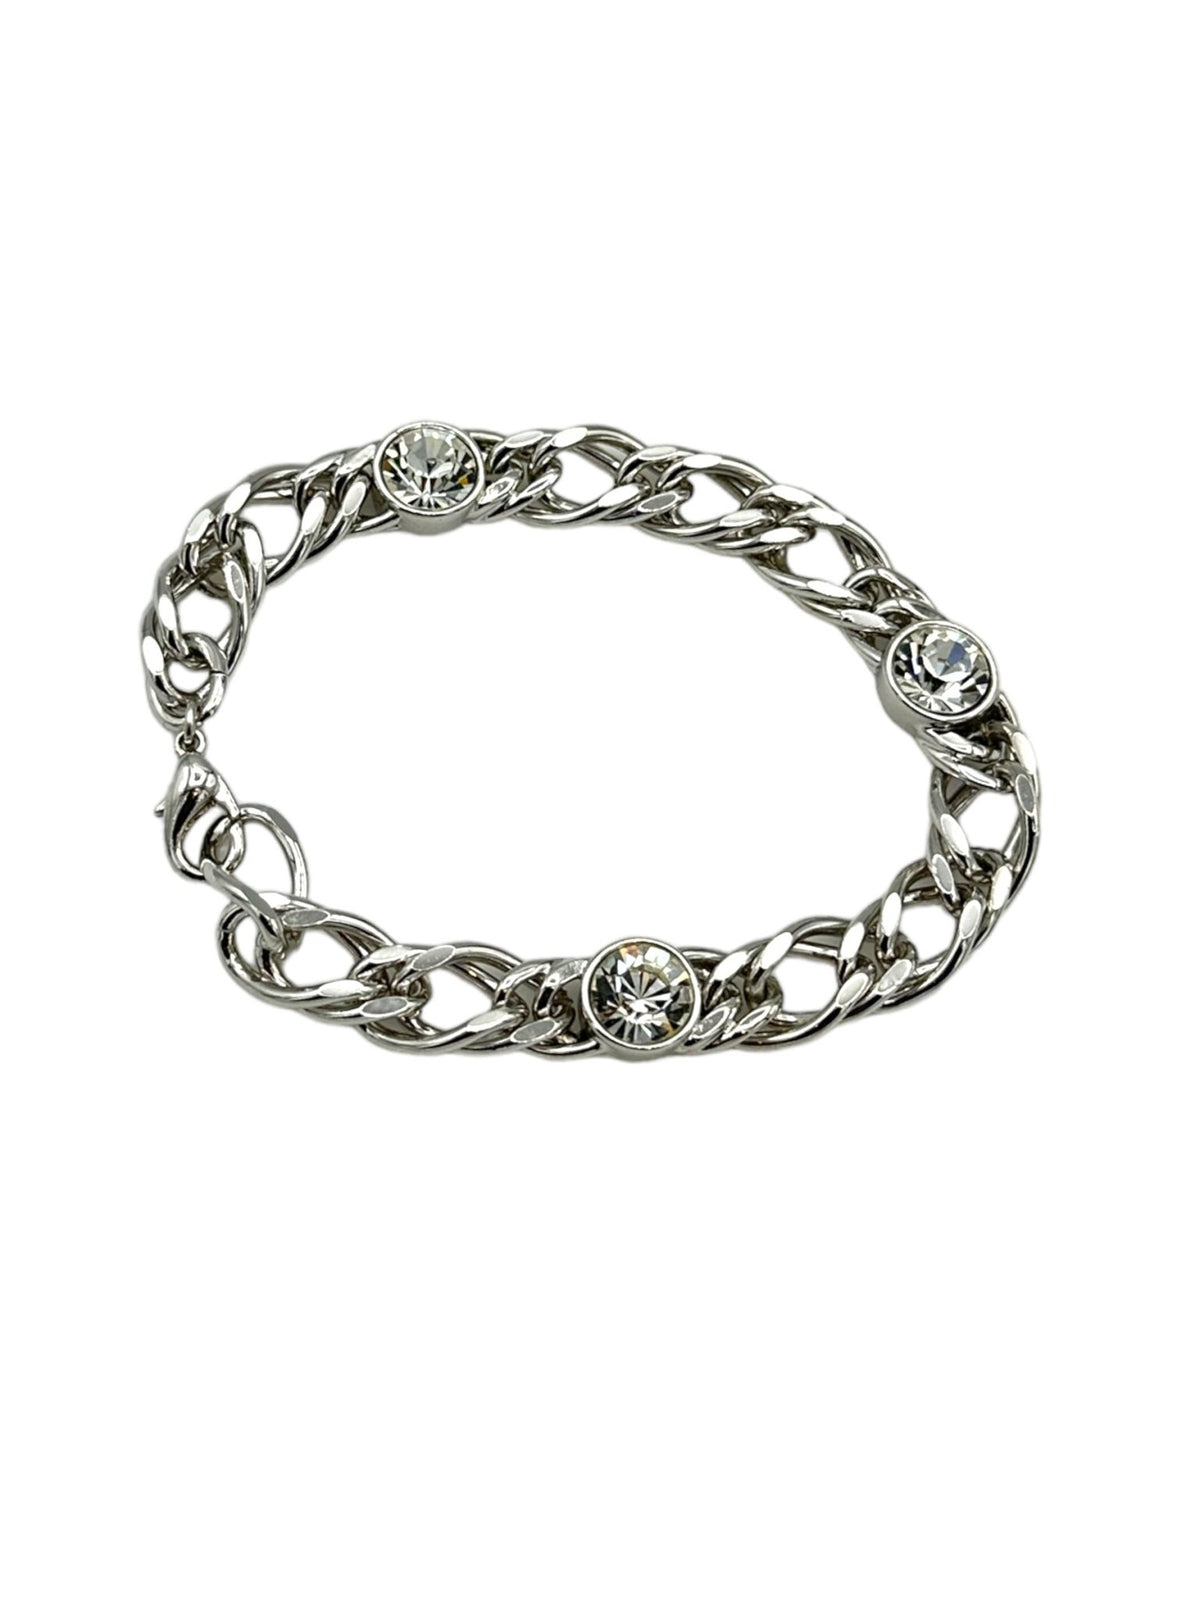 Kenneth Jay Lane KJL Silver Double Link Rhinestone Stacking Bracelet - 24 Wishes Vintage Jewelry